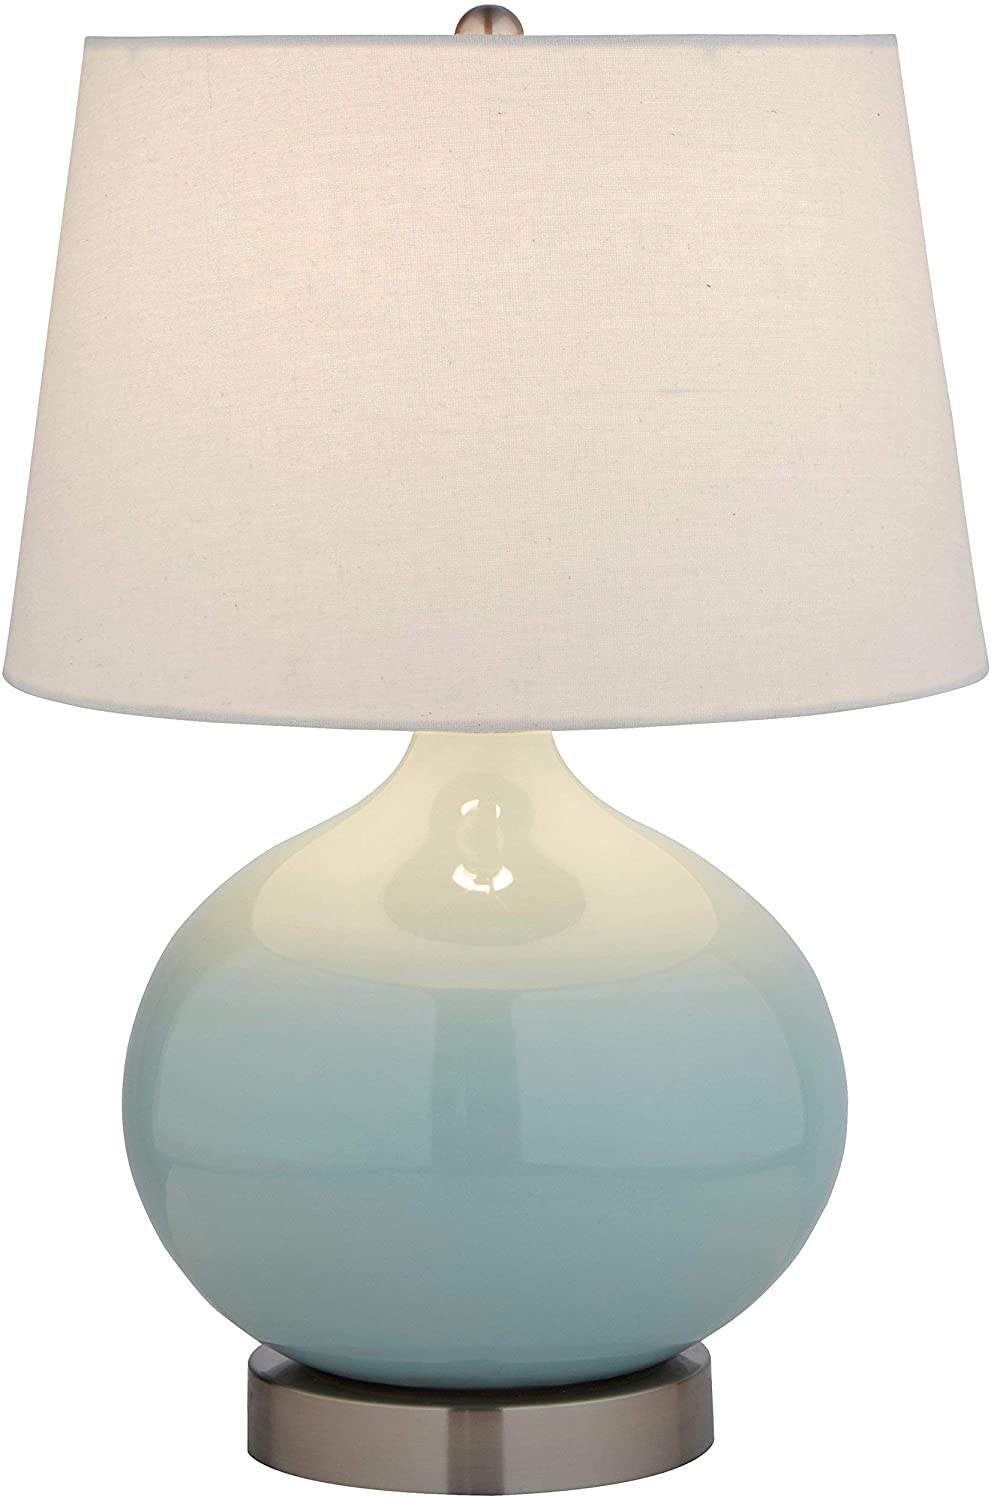 Amazon Brand – Stone & Beam Round Ceramic Table Lamp 